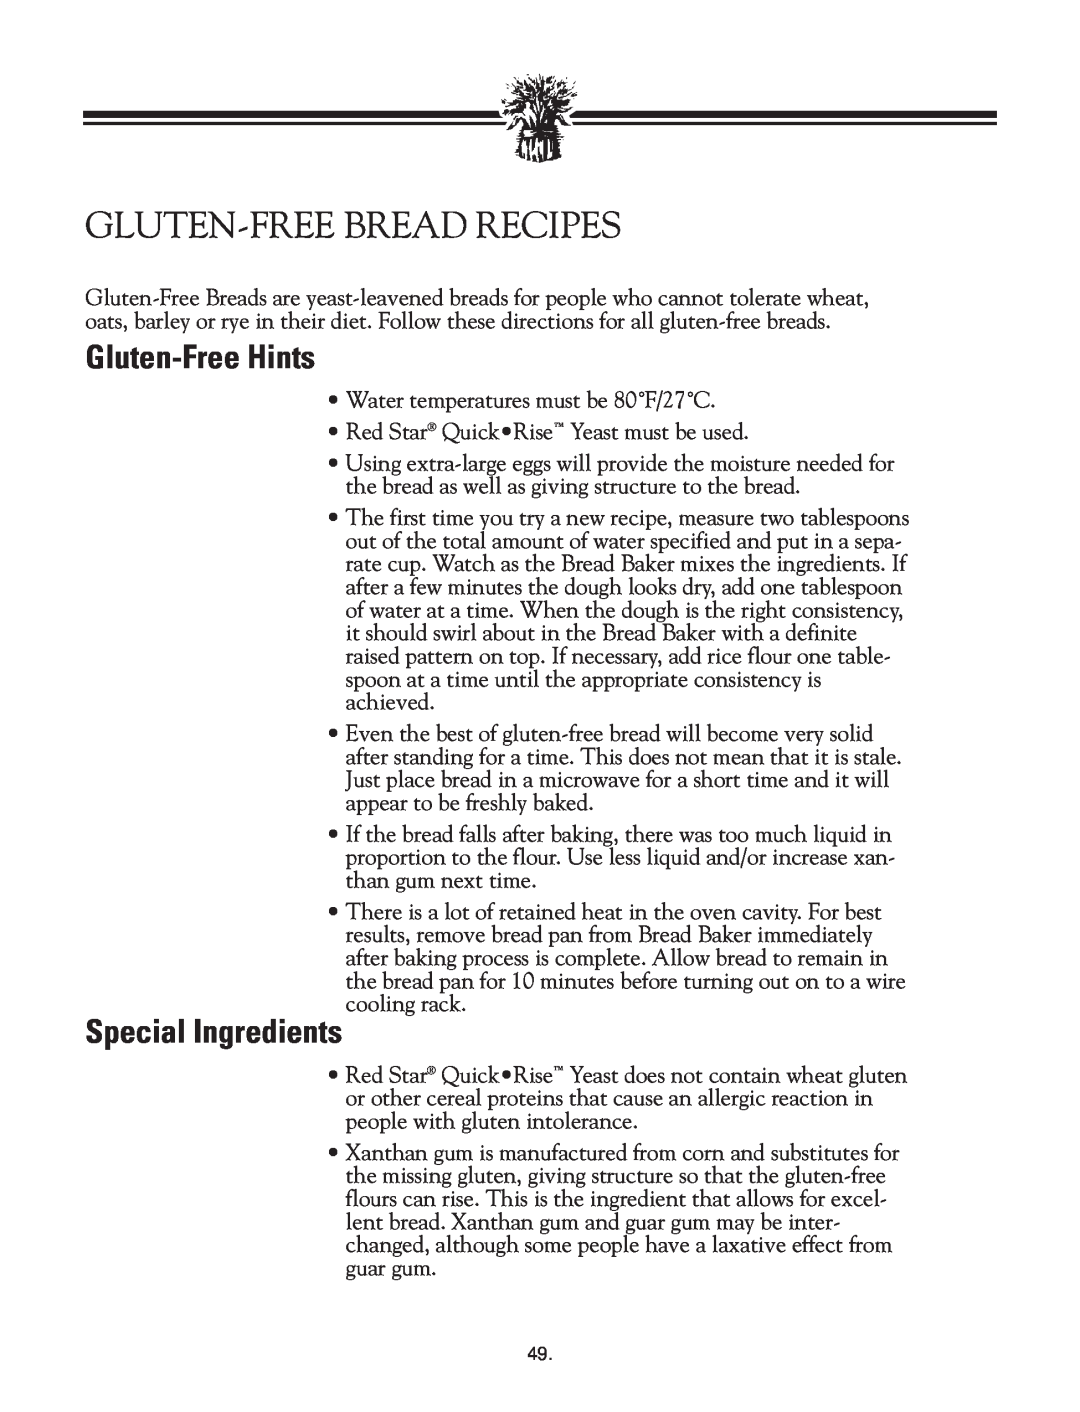 Breadman TR2828G instruction manual Gluten-Freebread Recipes, Gluten-FreeHints, Special Ingredients 